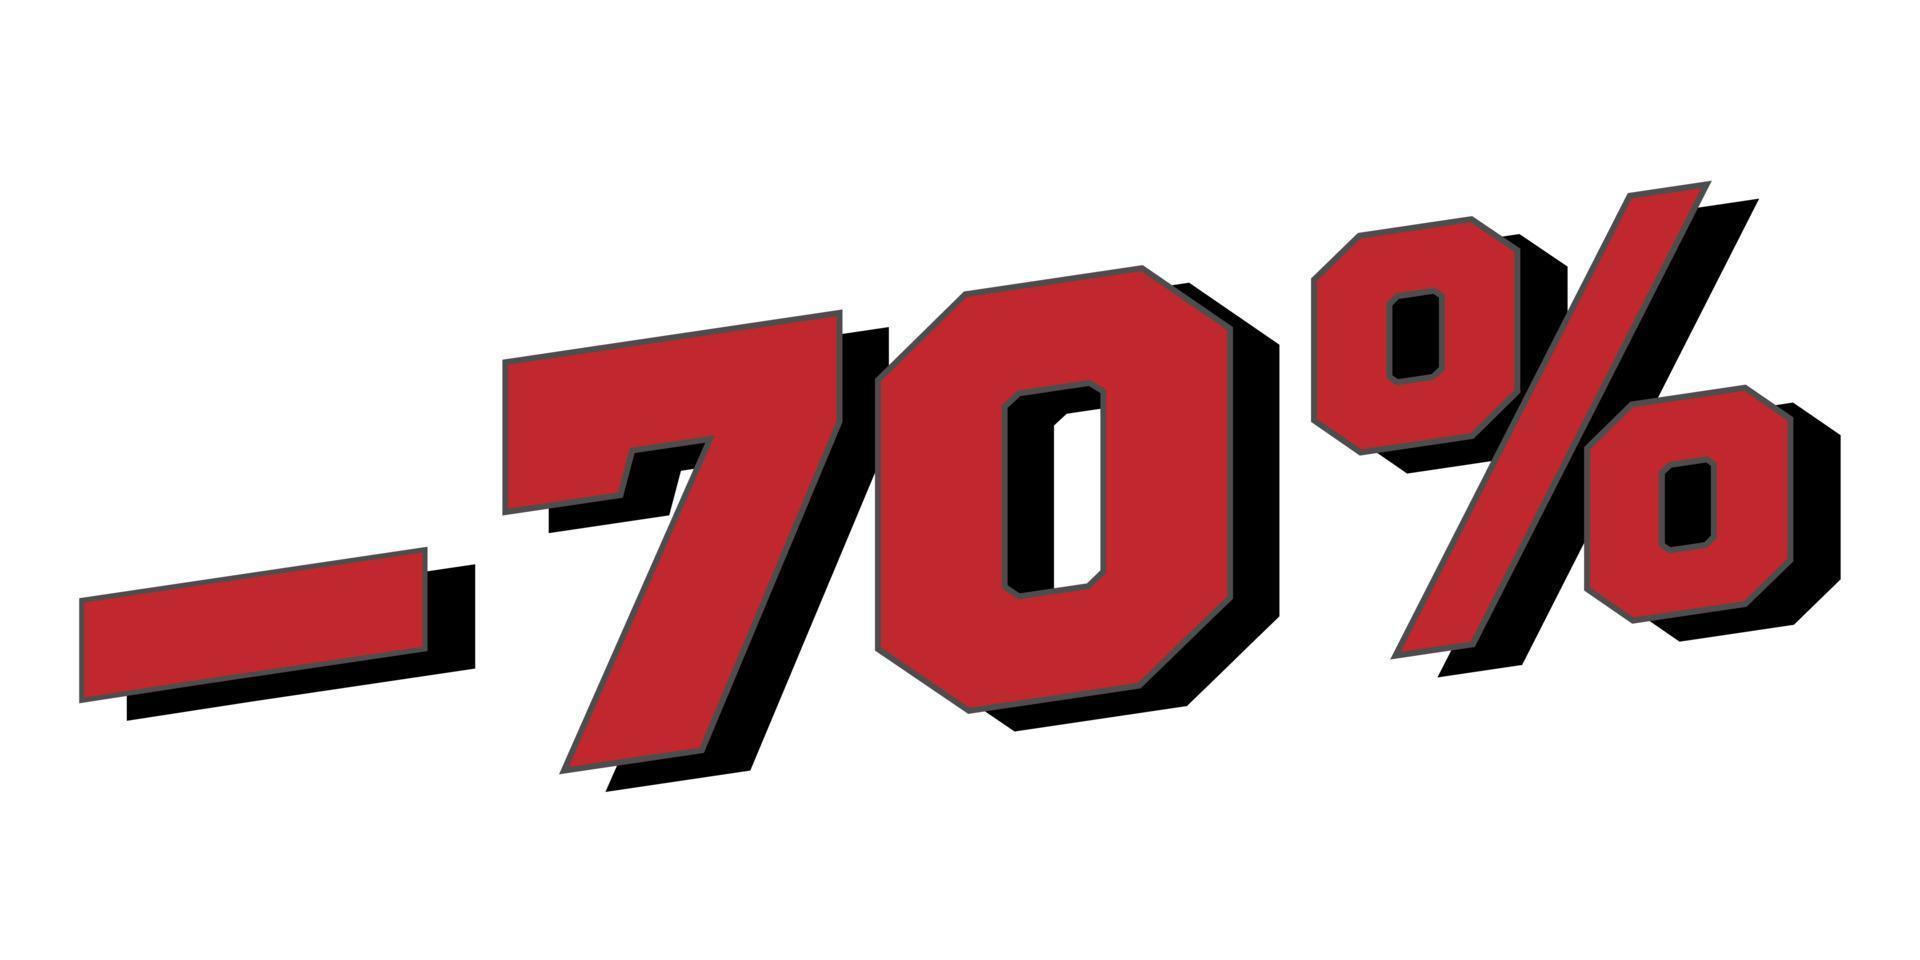 Sale 70 percent off banner. Vector illustration.